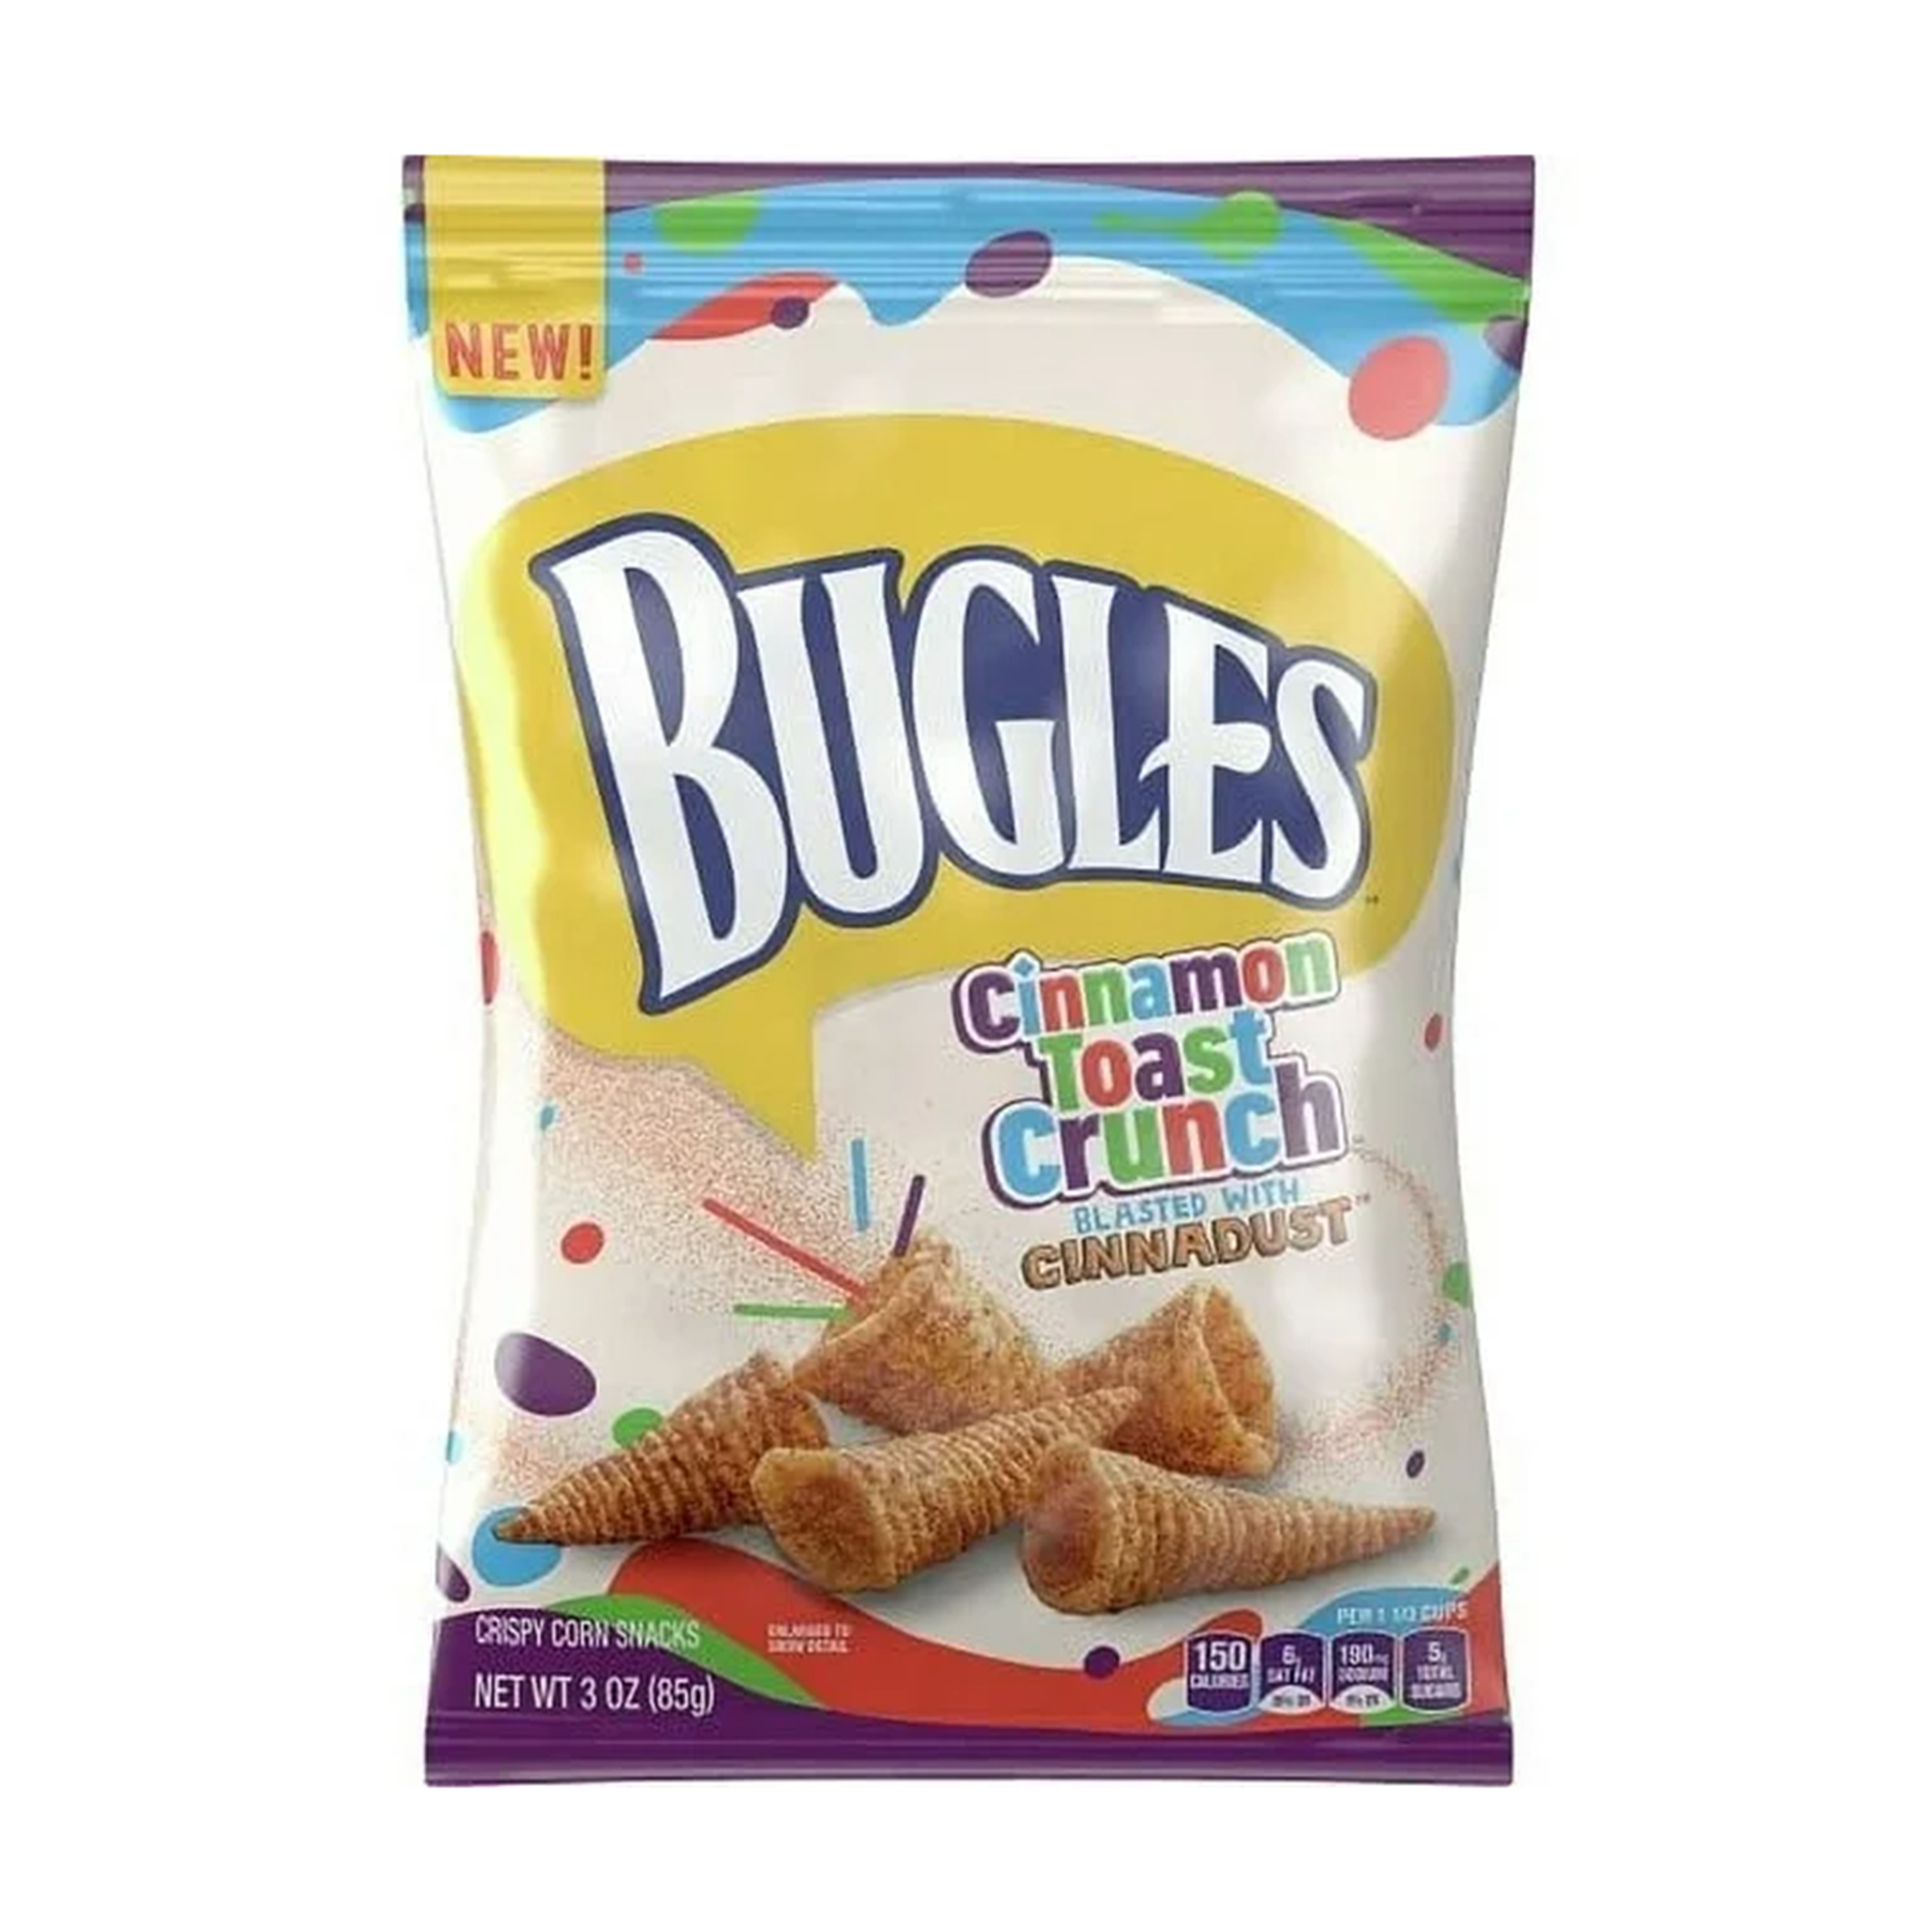 Bugles - Cinnamon Toast Crunch